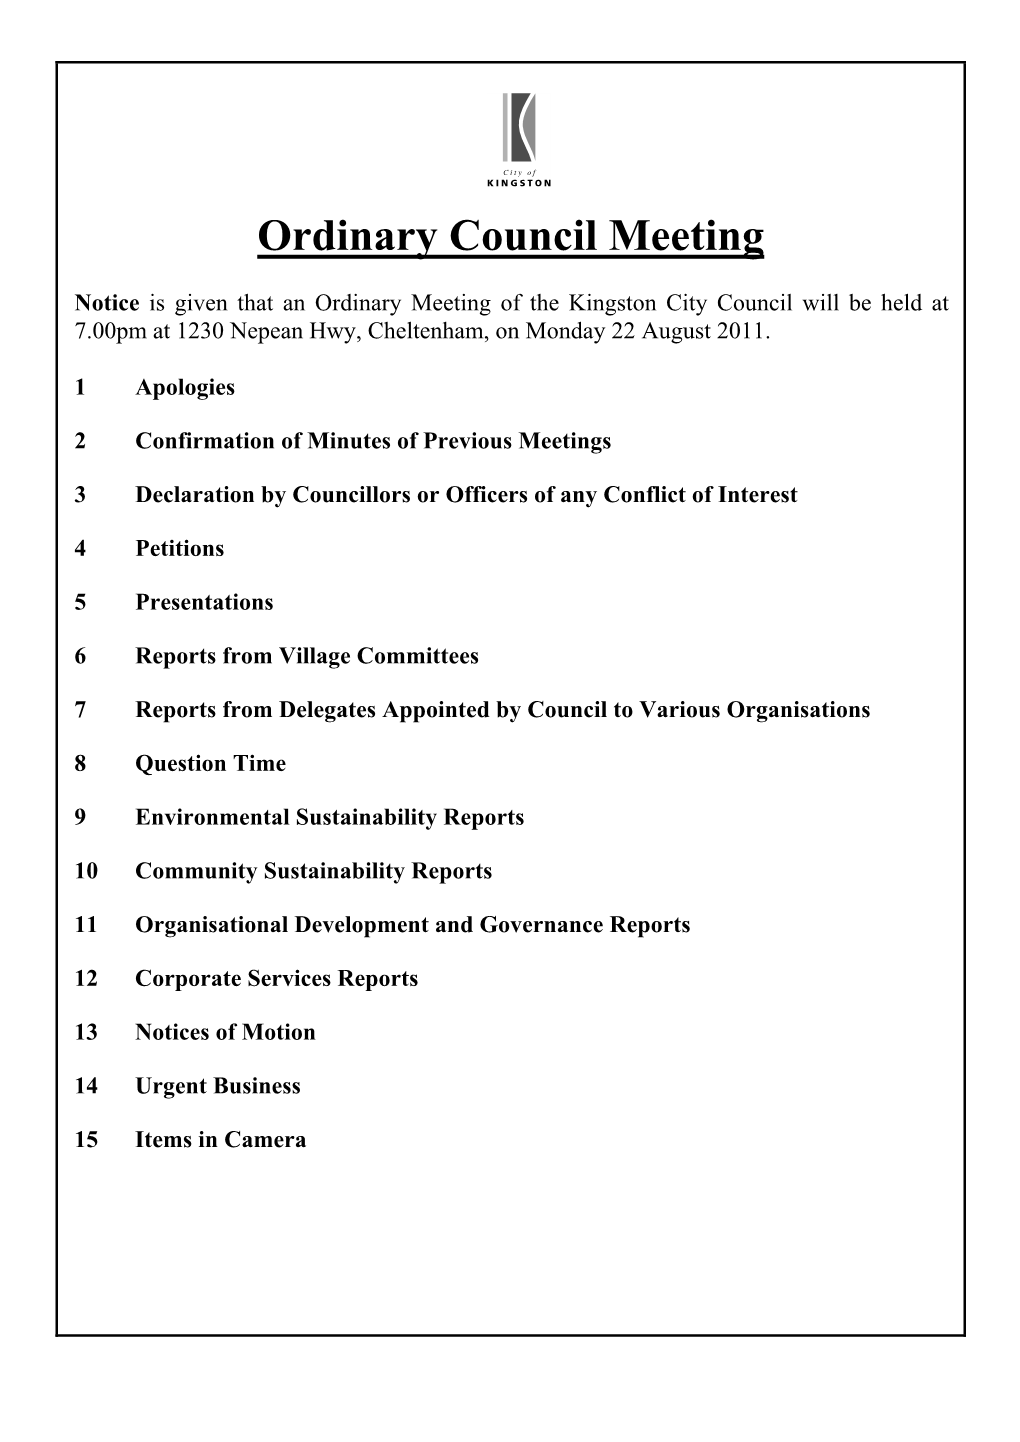 Agenda Ordinary Council Meeting